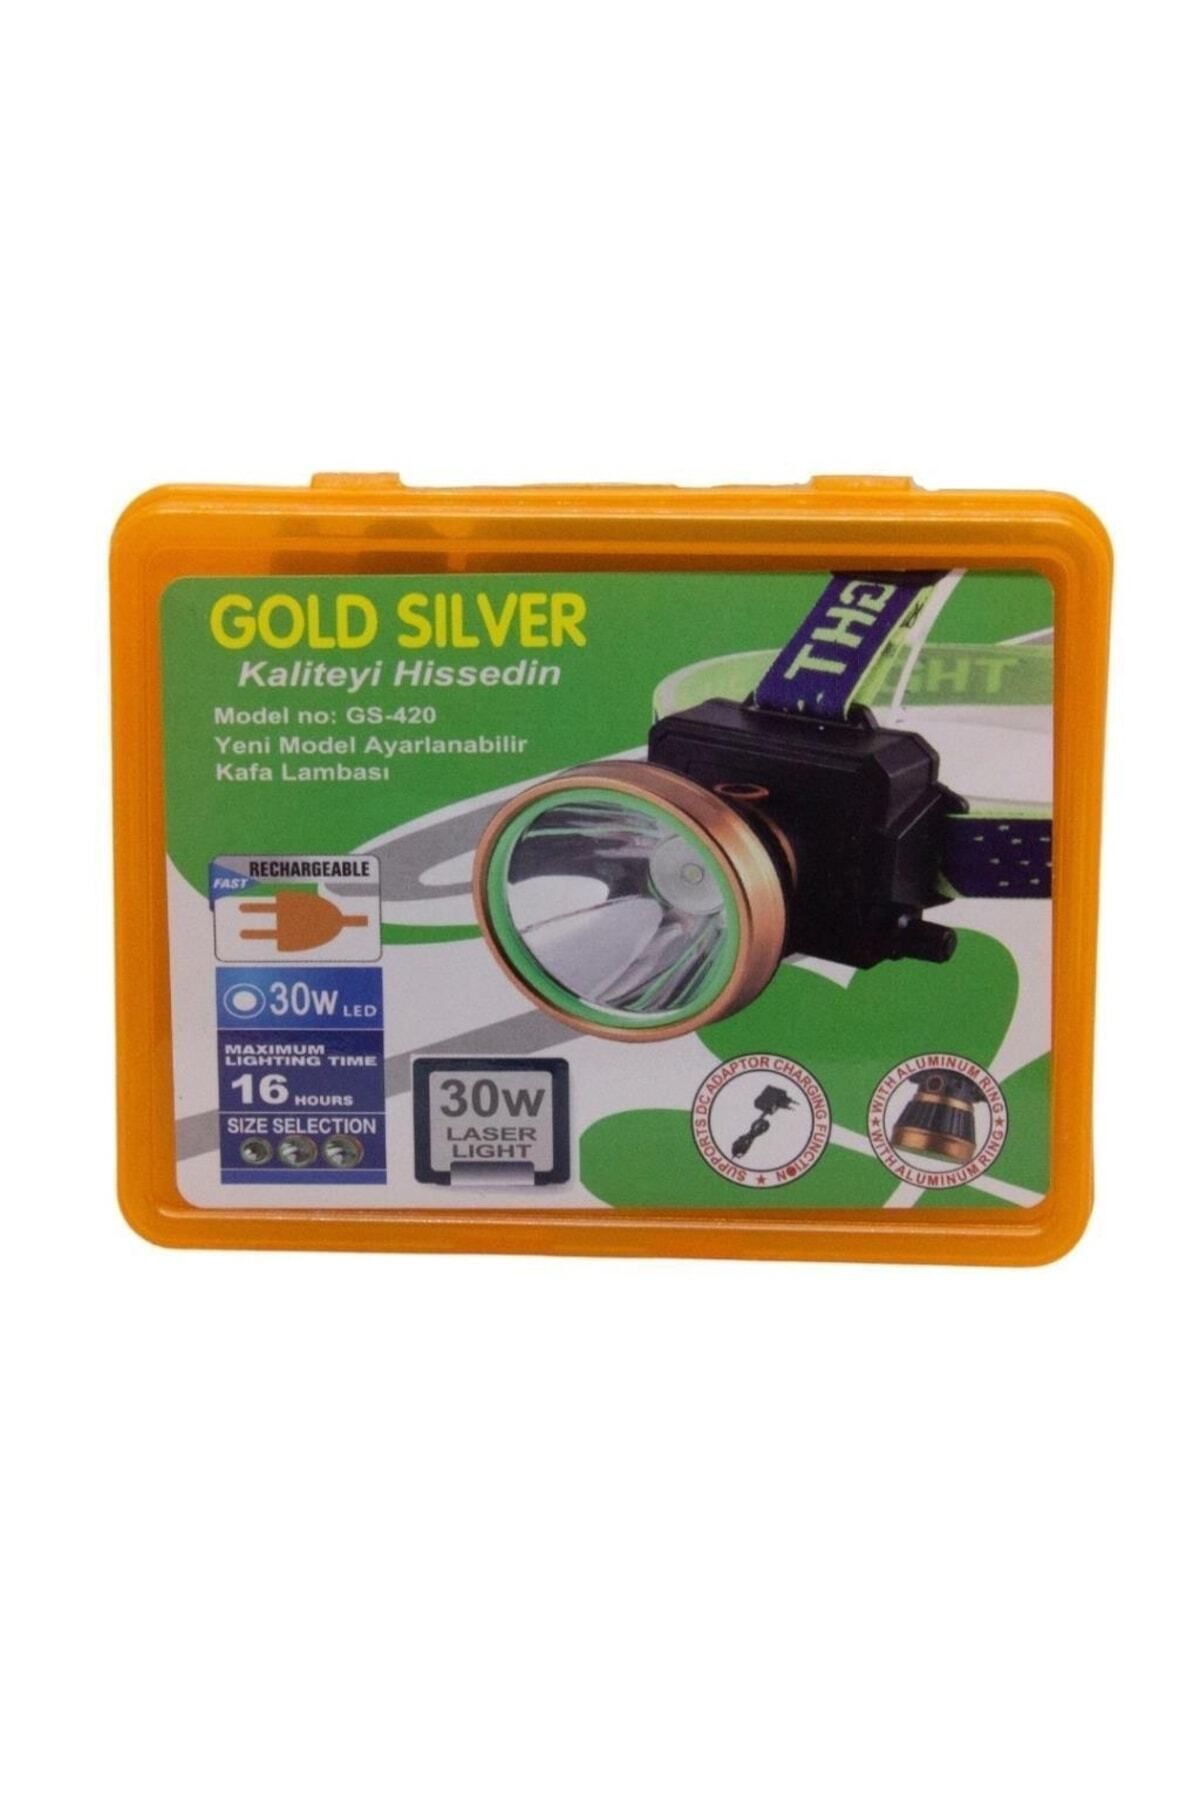 GoldSilver Gold Silver Gs-420 30w Zoomlu Şarjlı Kafa Lambası